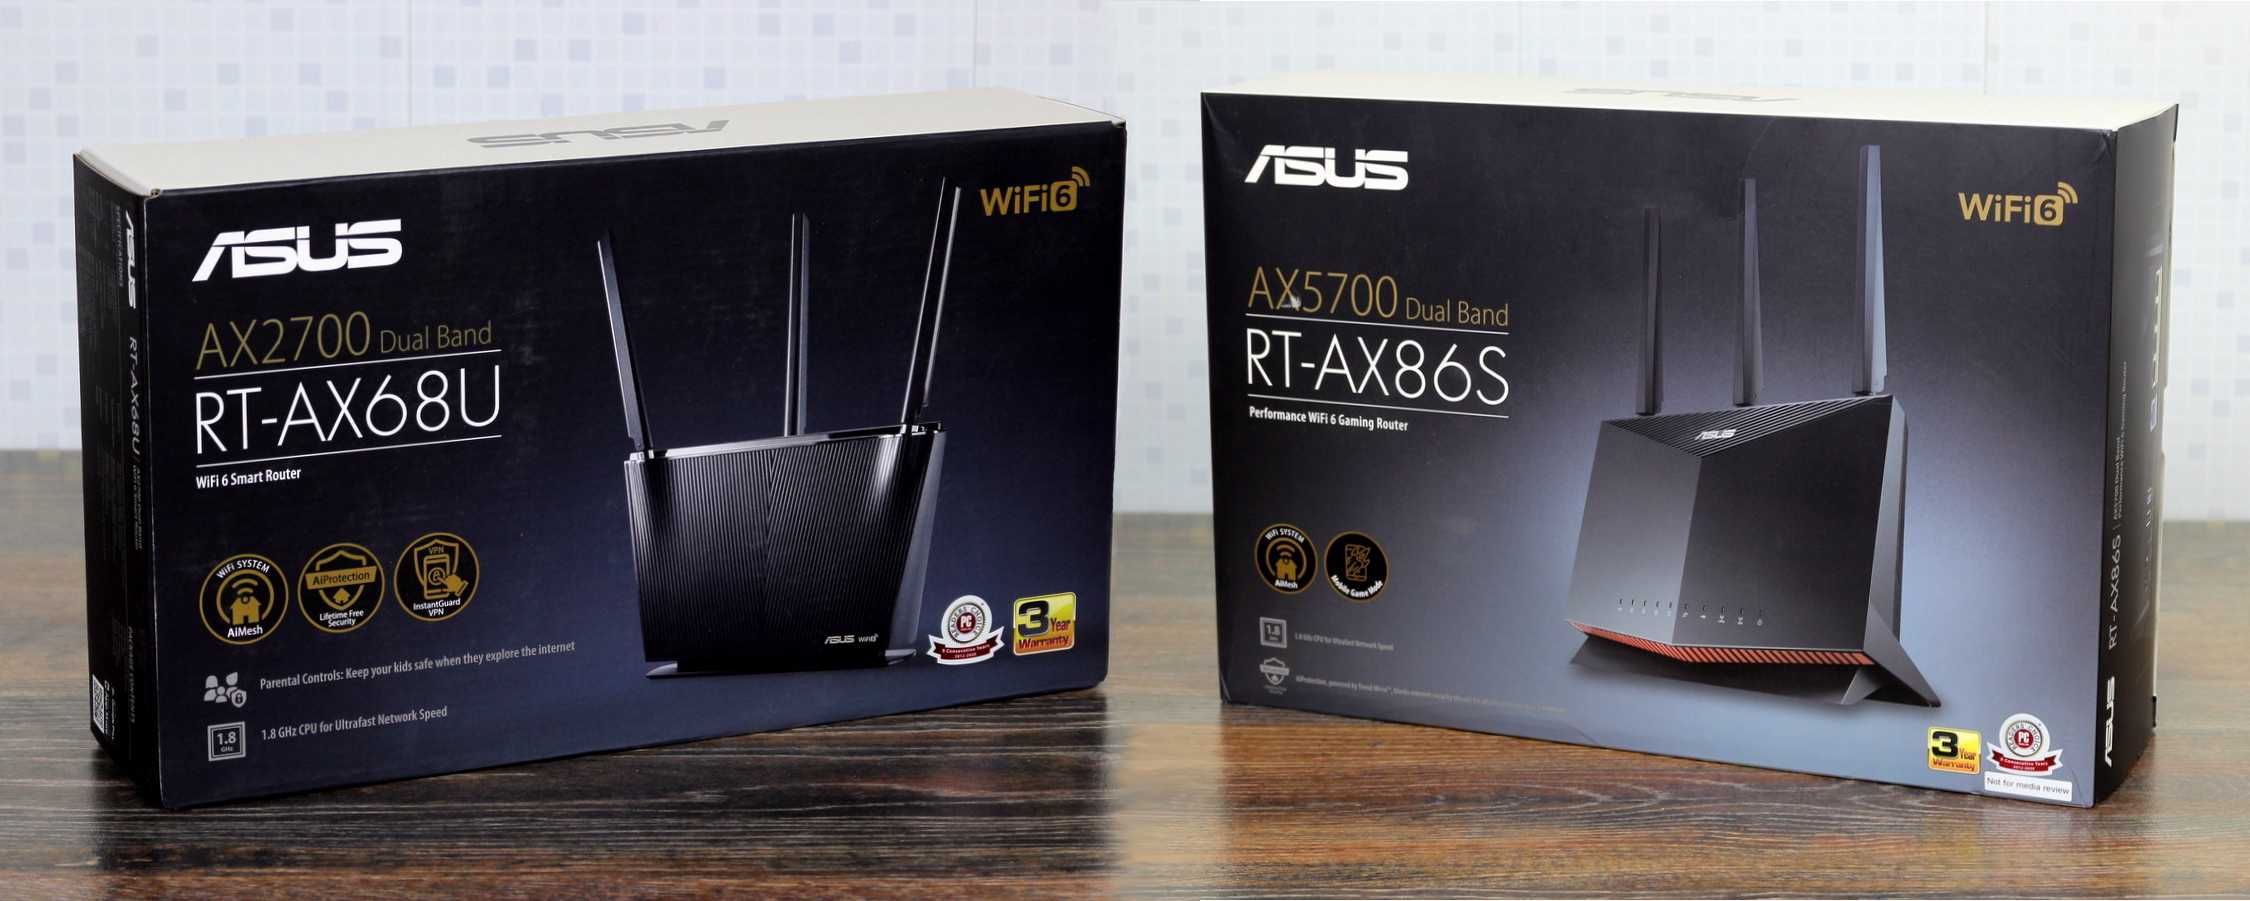 ASUS RT-AX68U / RT-AX86S CPU 2x1800MHz 512Mb WiFi 6 Mesh Wi-Fi роутер